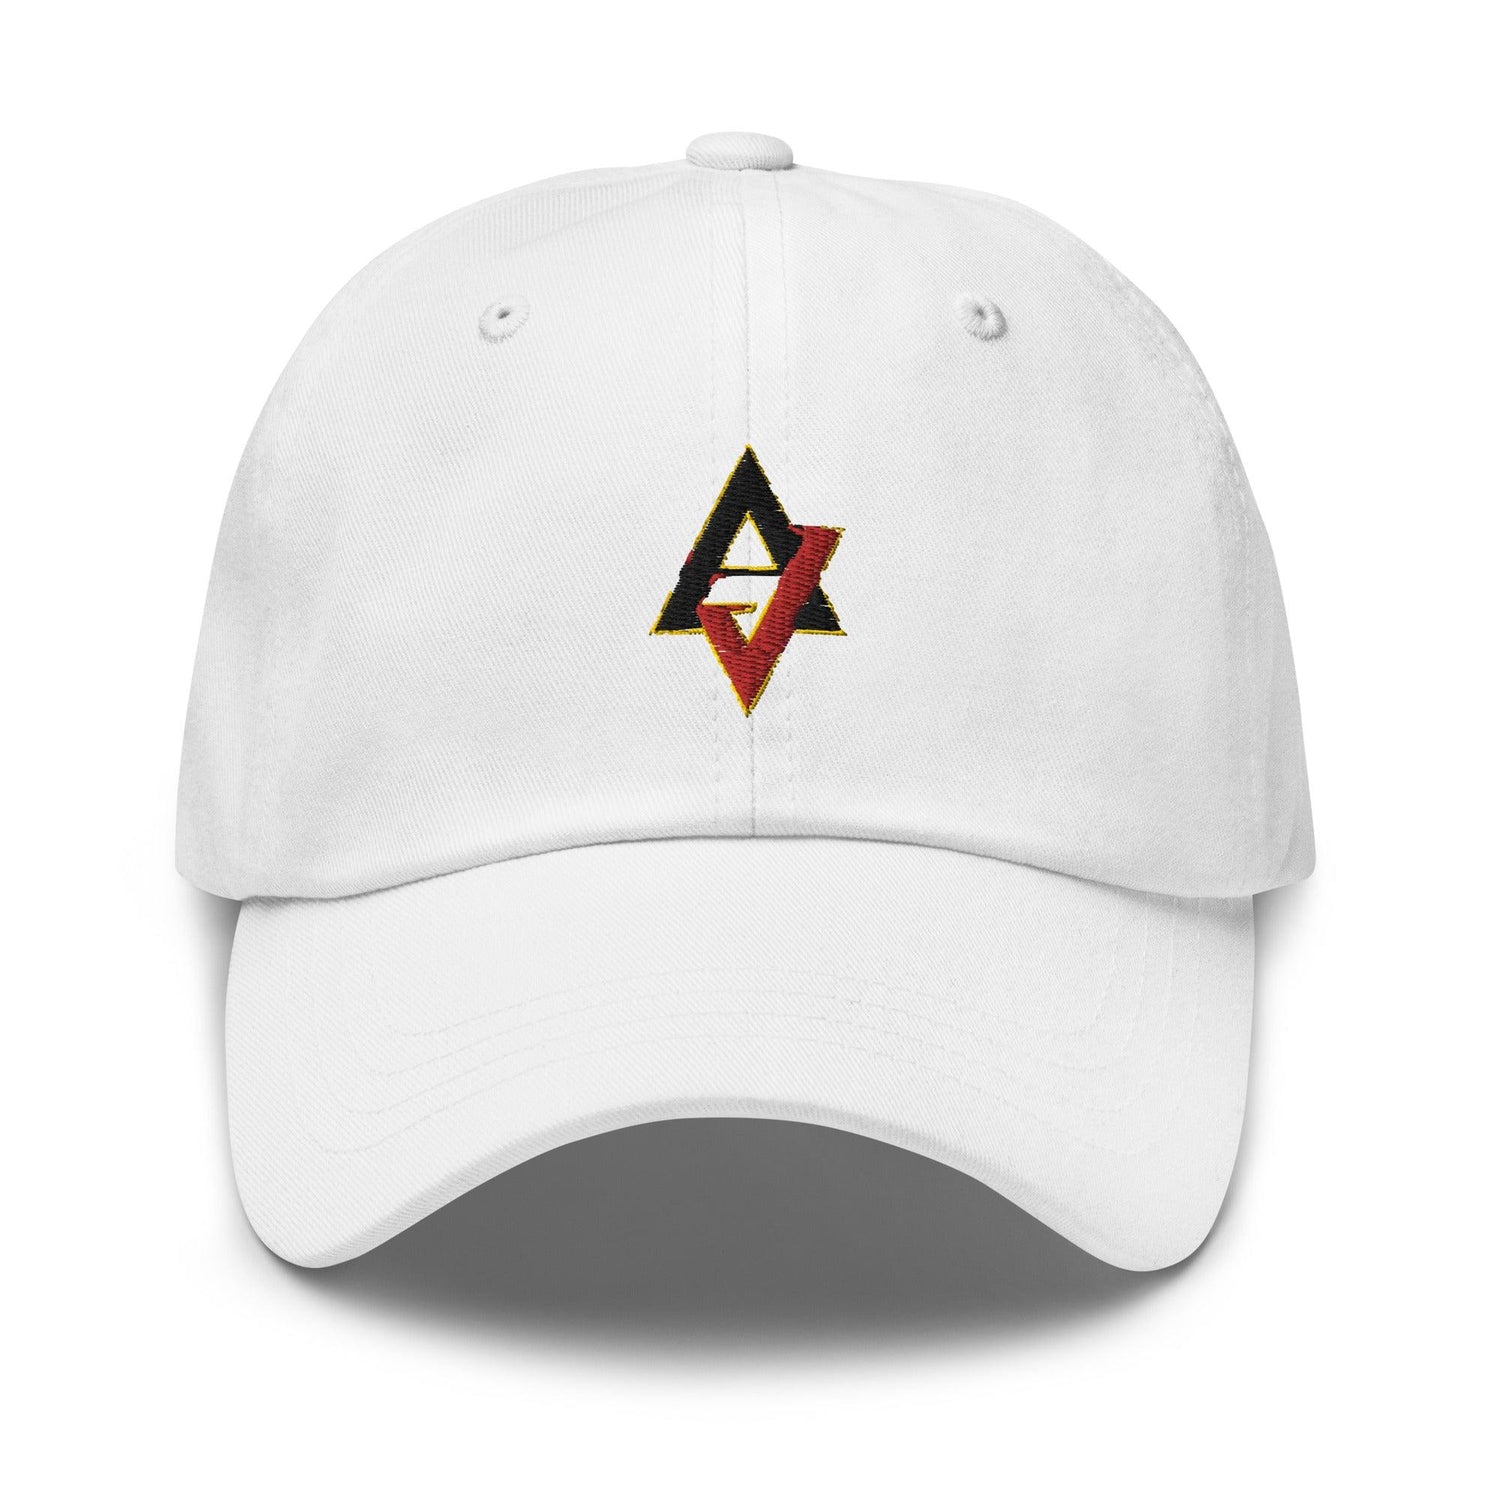 AJ Vukovich “Signature” hat - Fan Arch